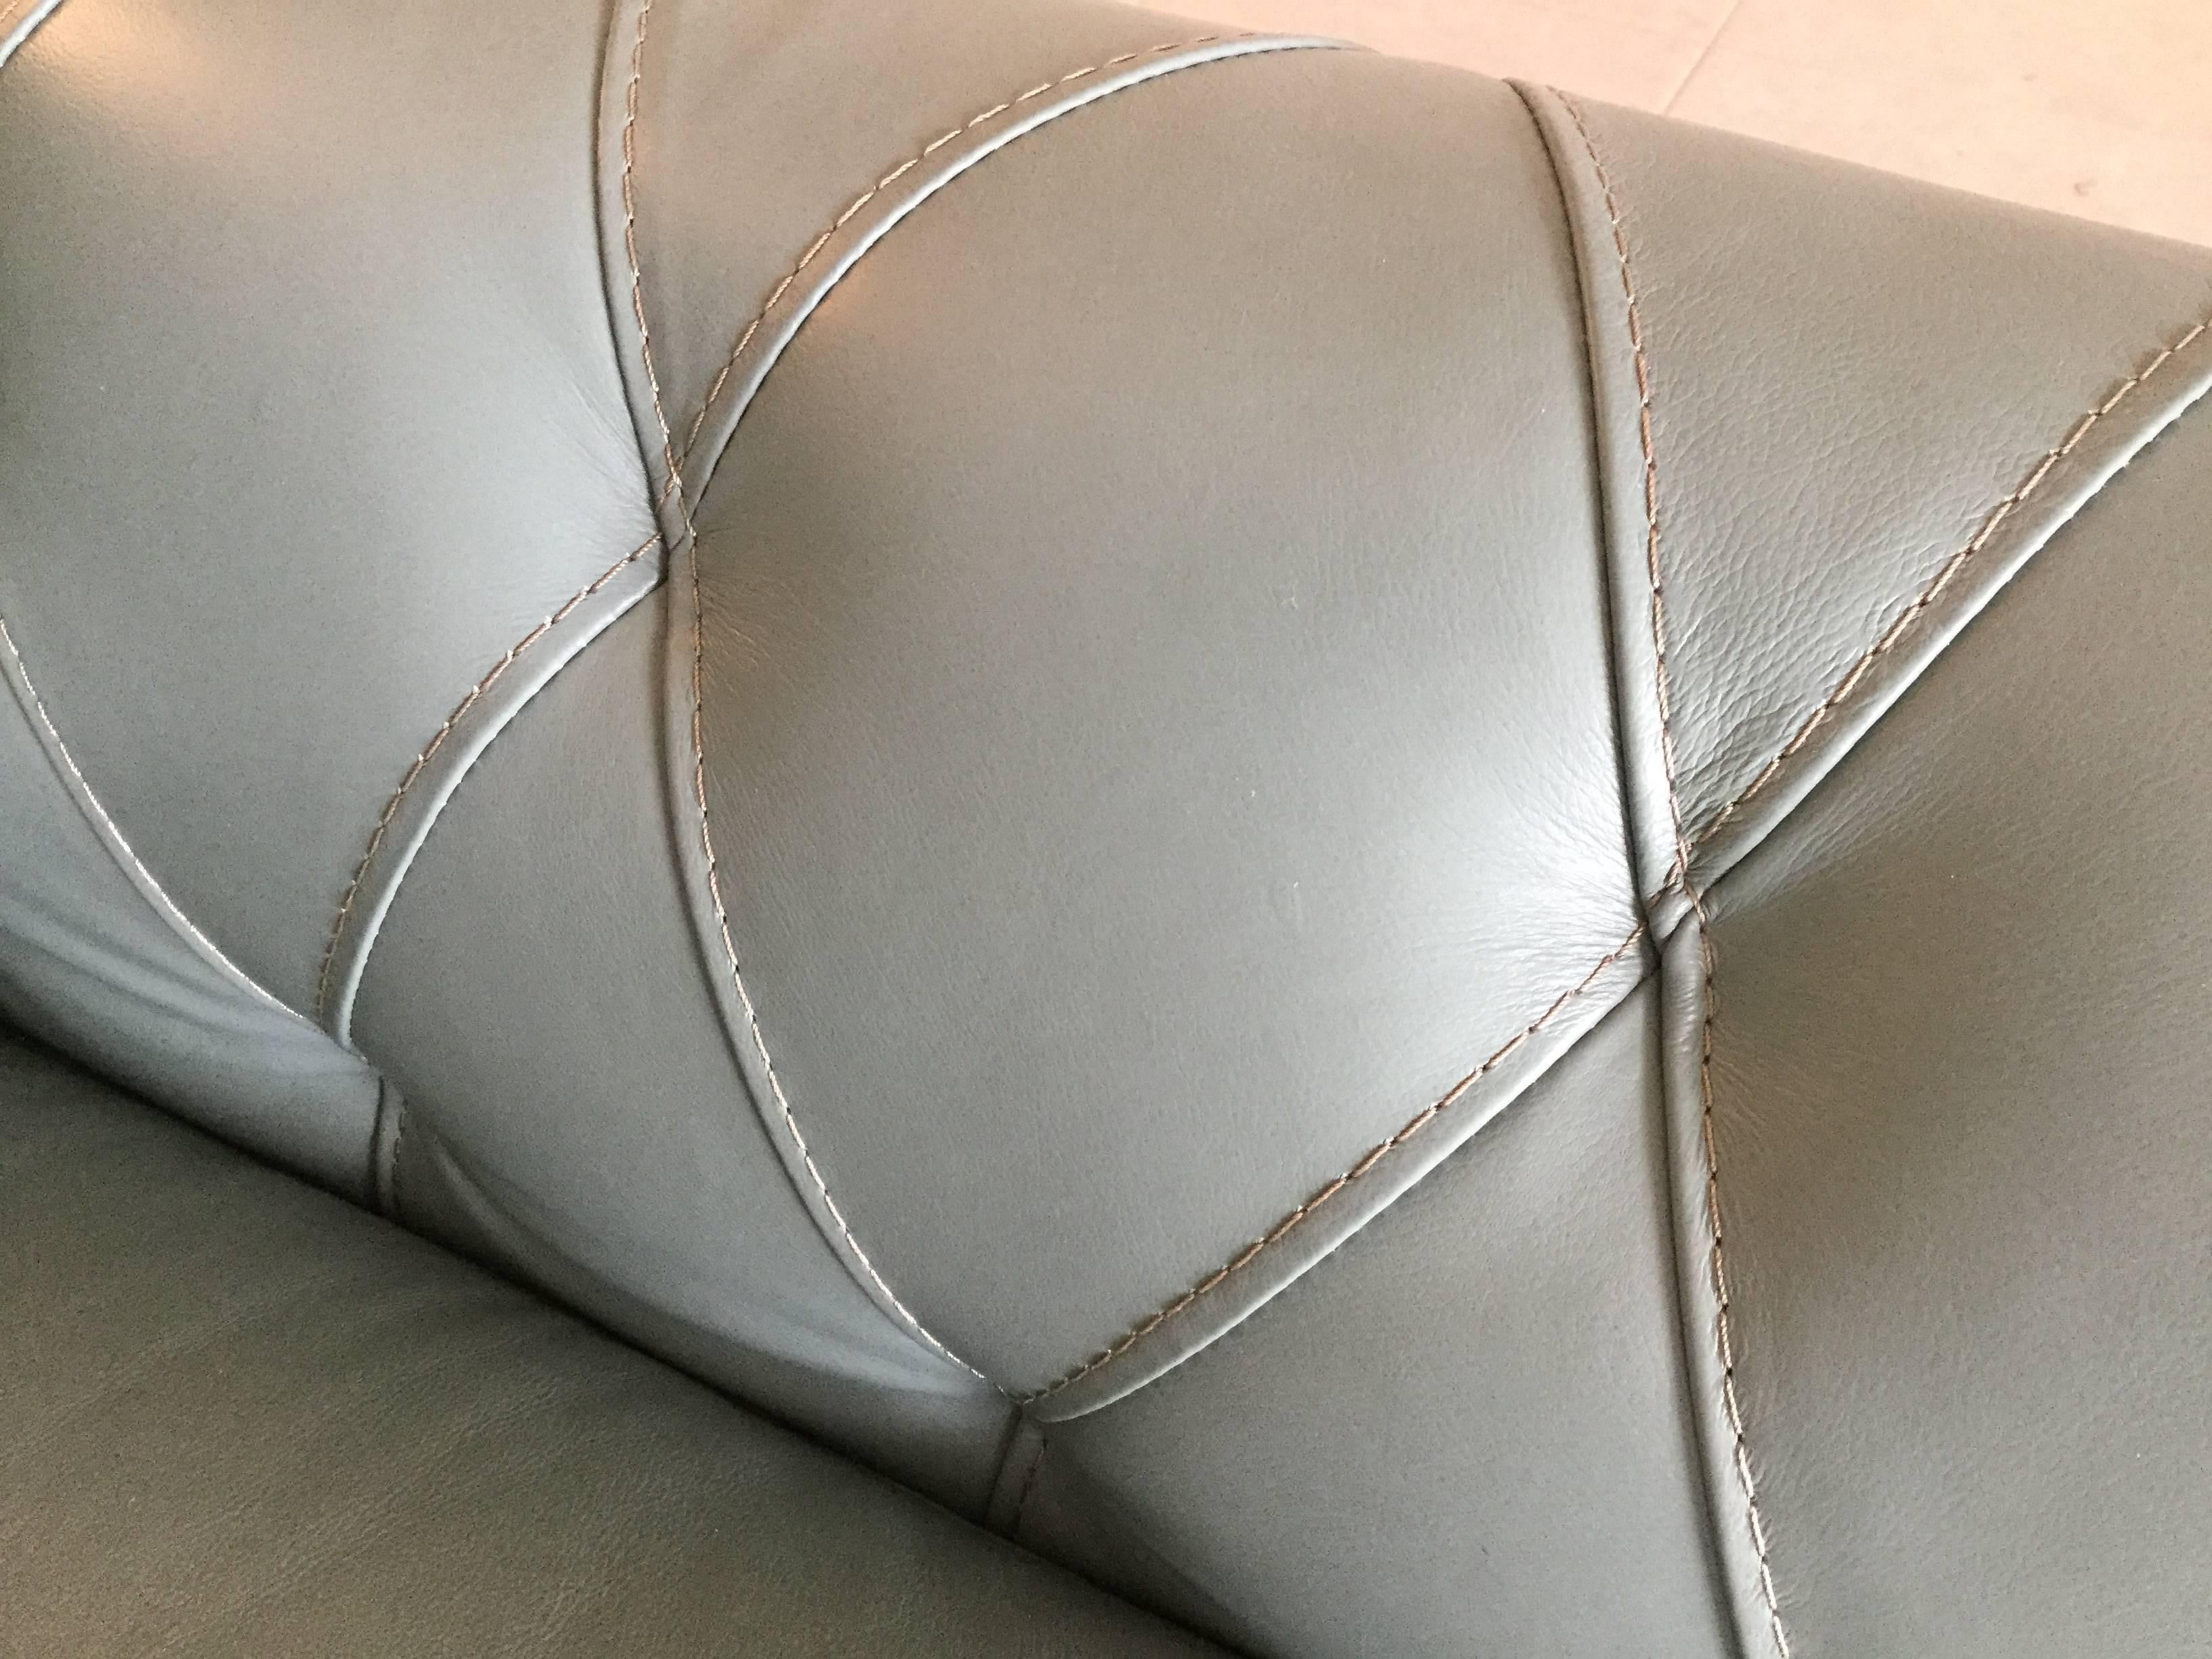 teal blue leather sofa